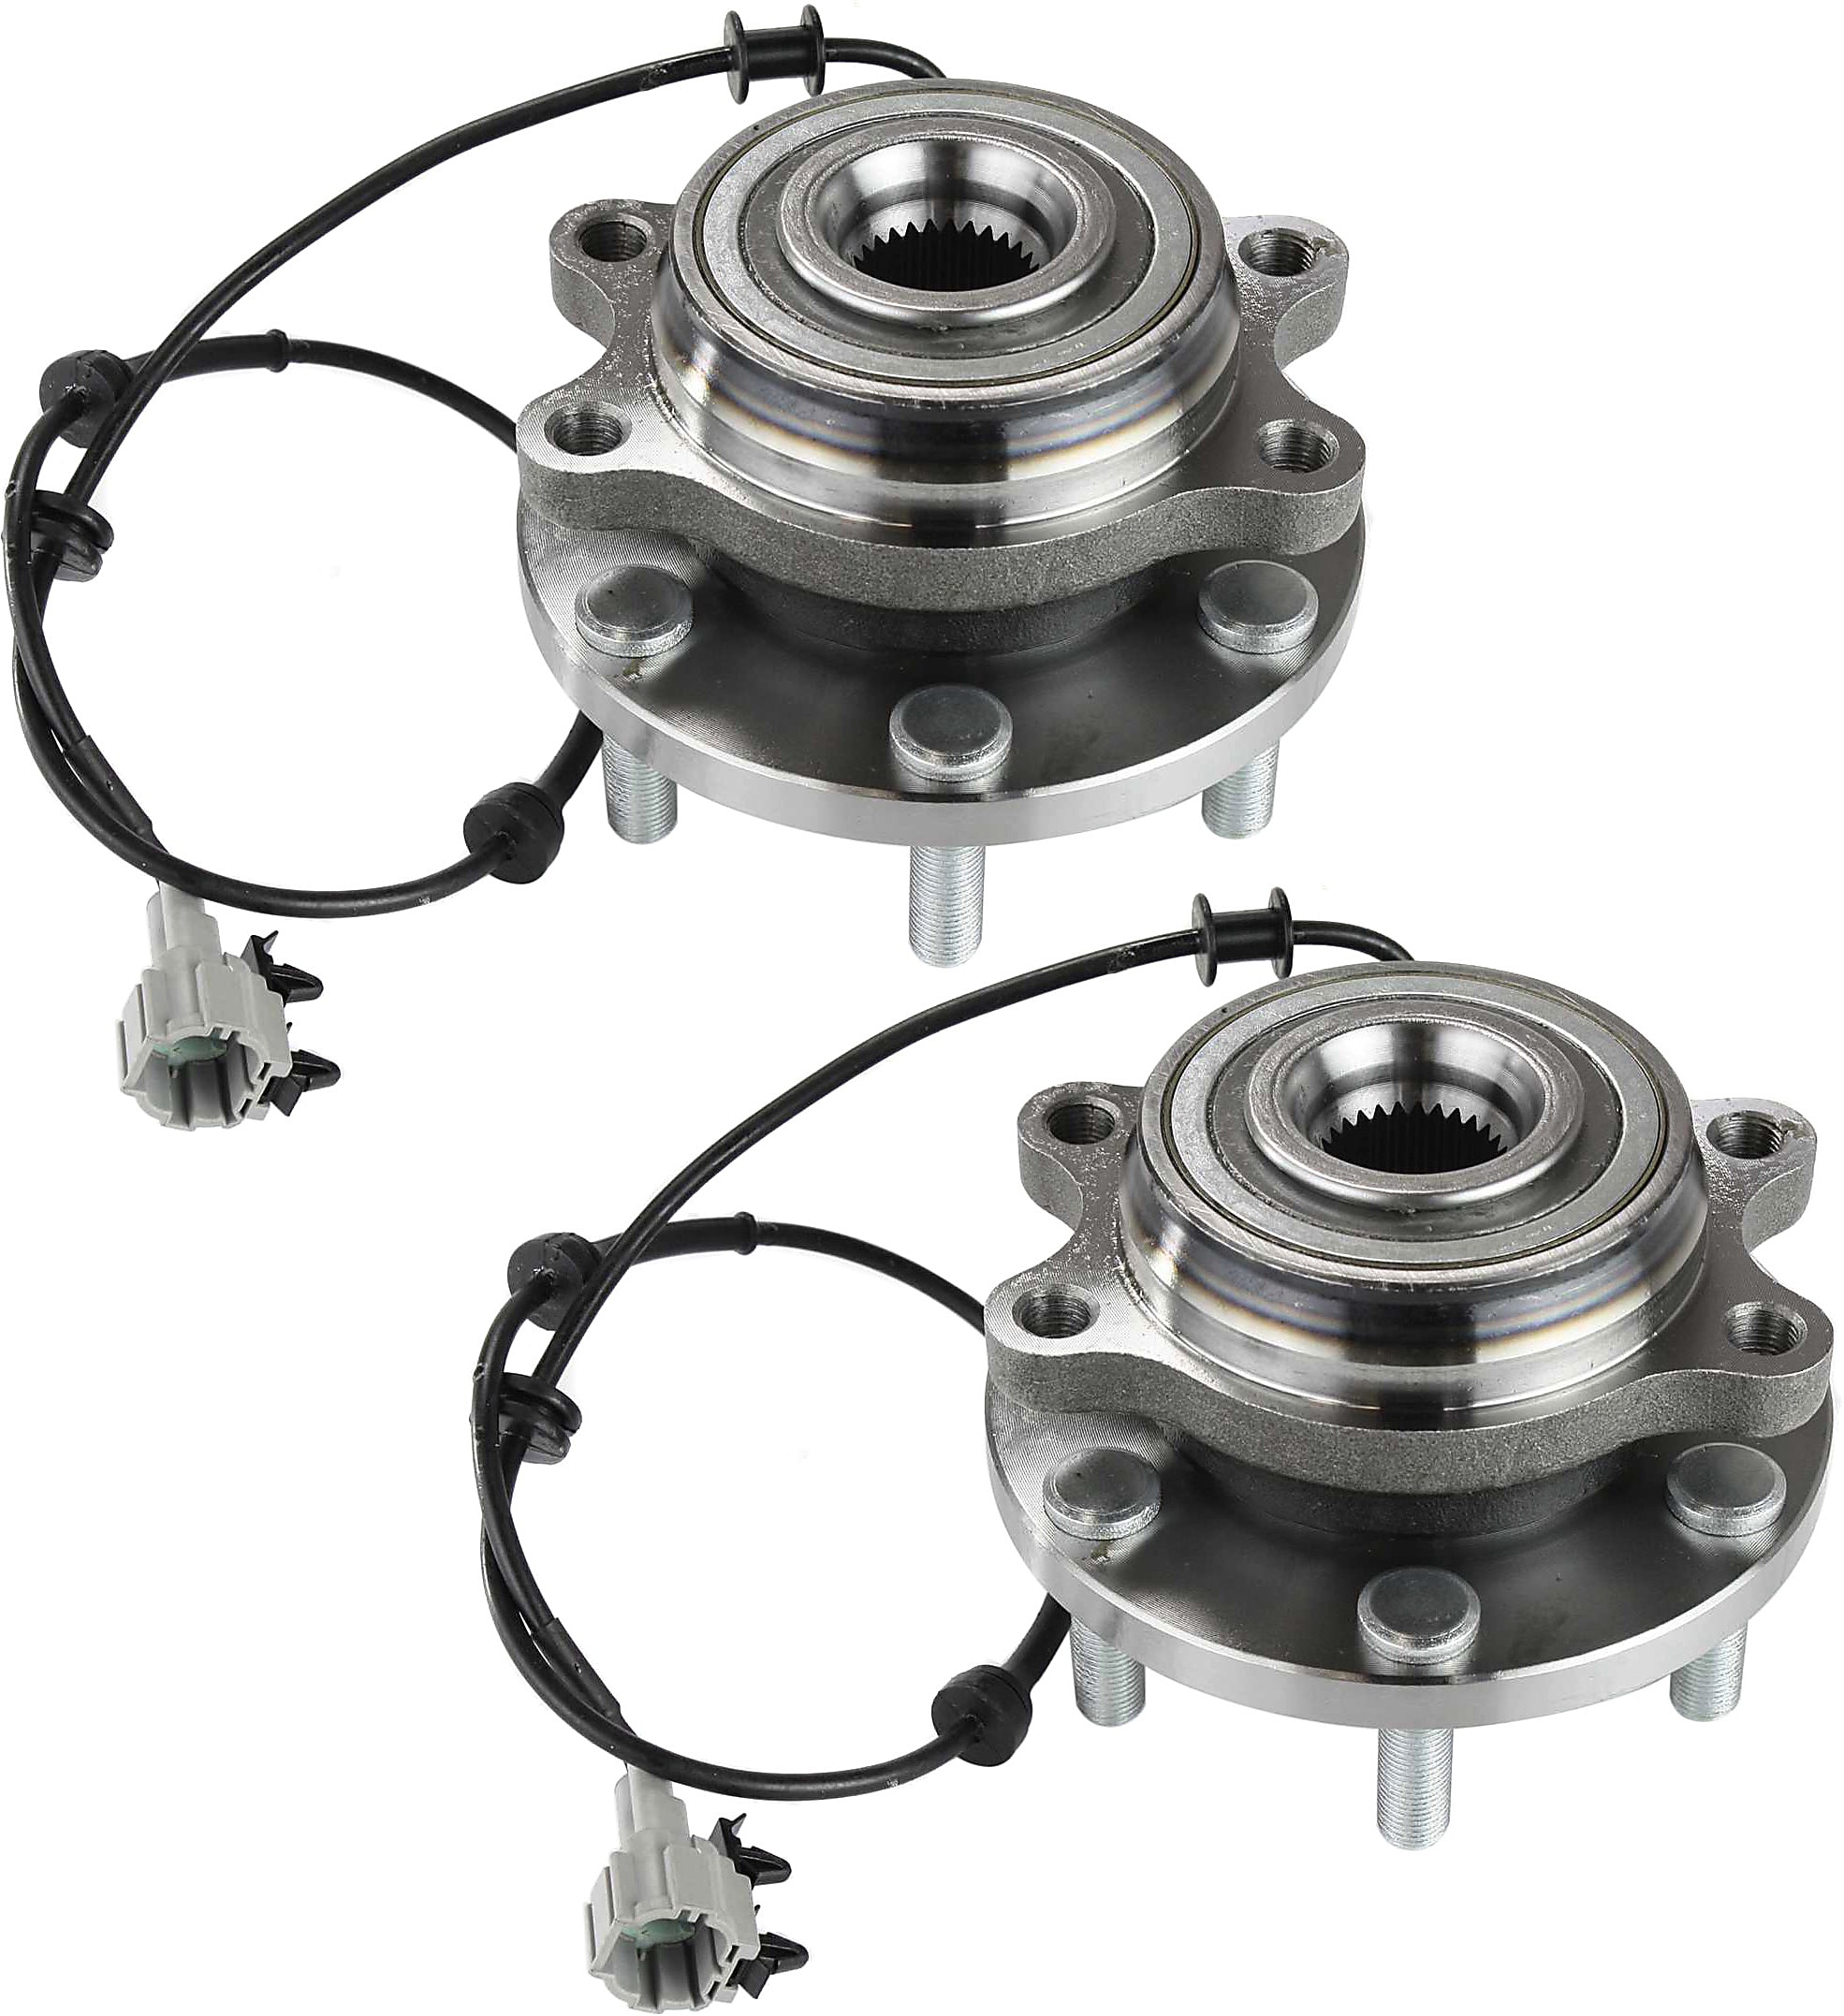 2 pack ROADFAR Front Wheel Hub Bearing fit for 2005-2015 Frontier 2005-2012 Pathfinder Wheel Hub Assemblies OE 515065 